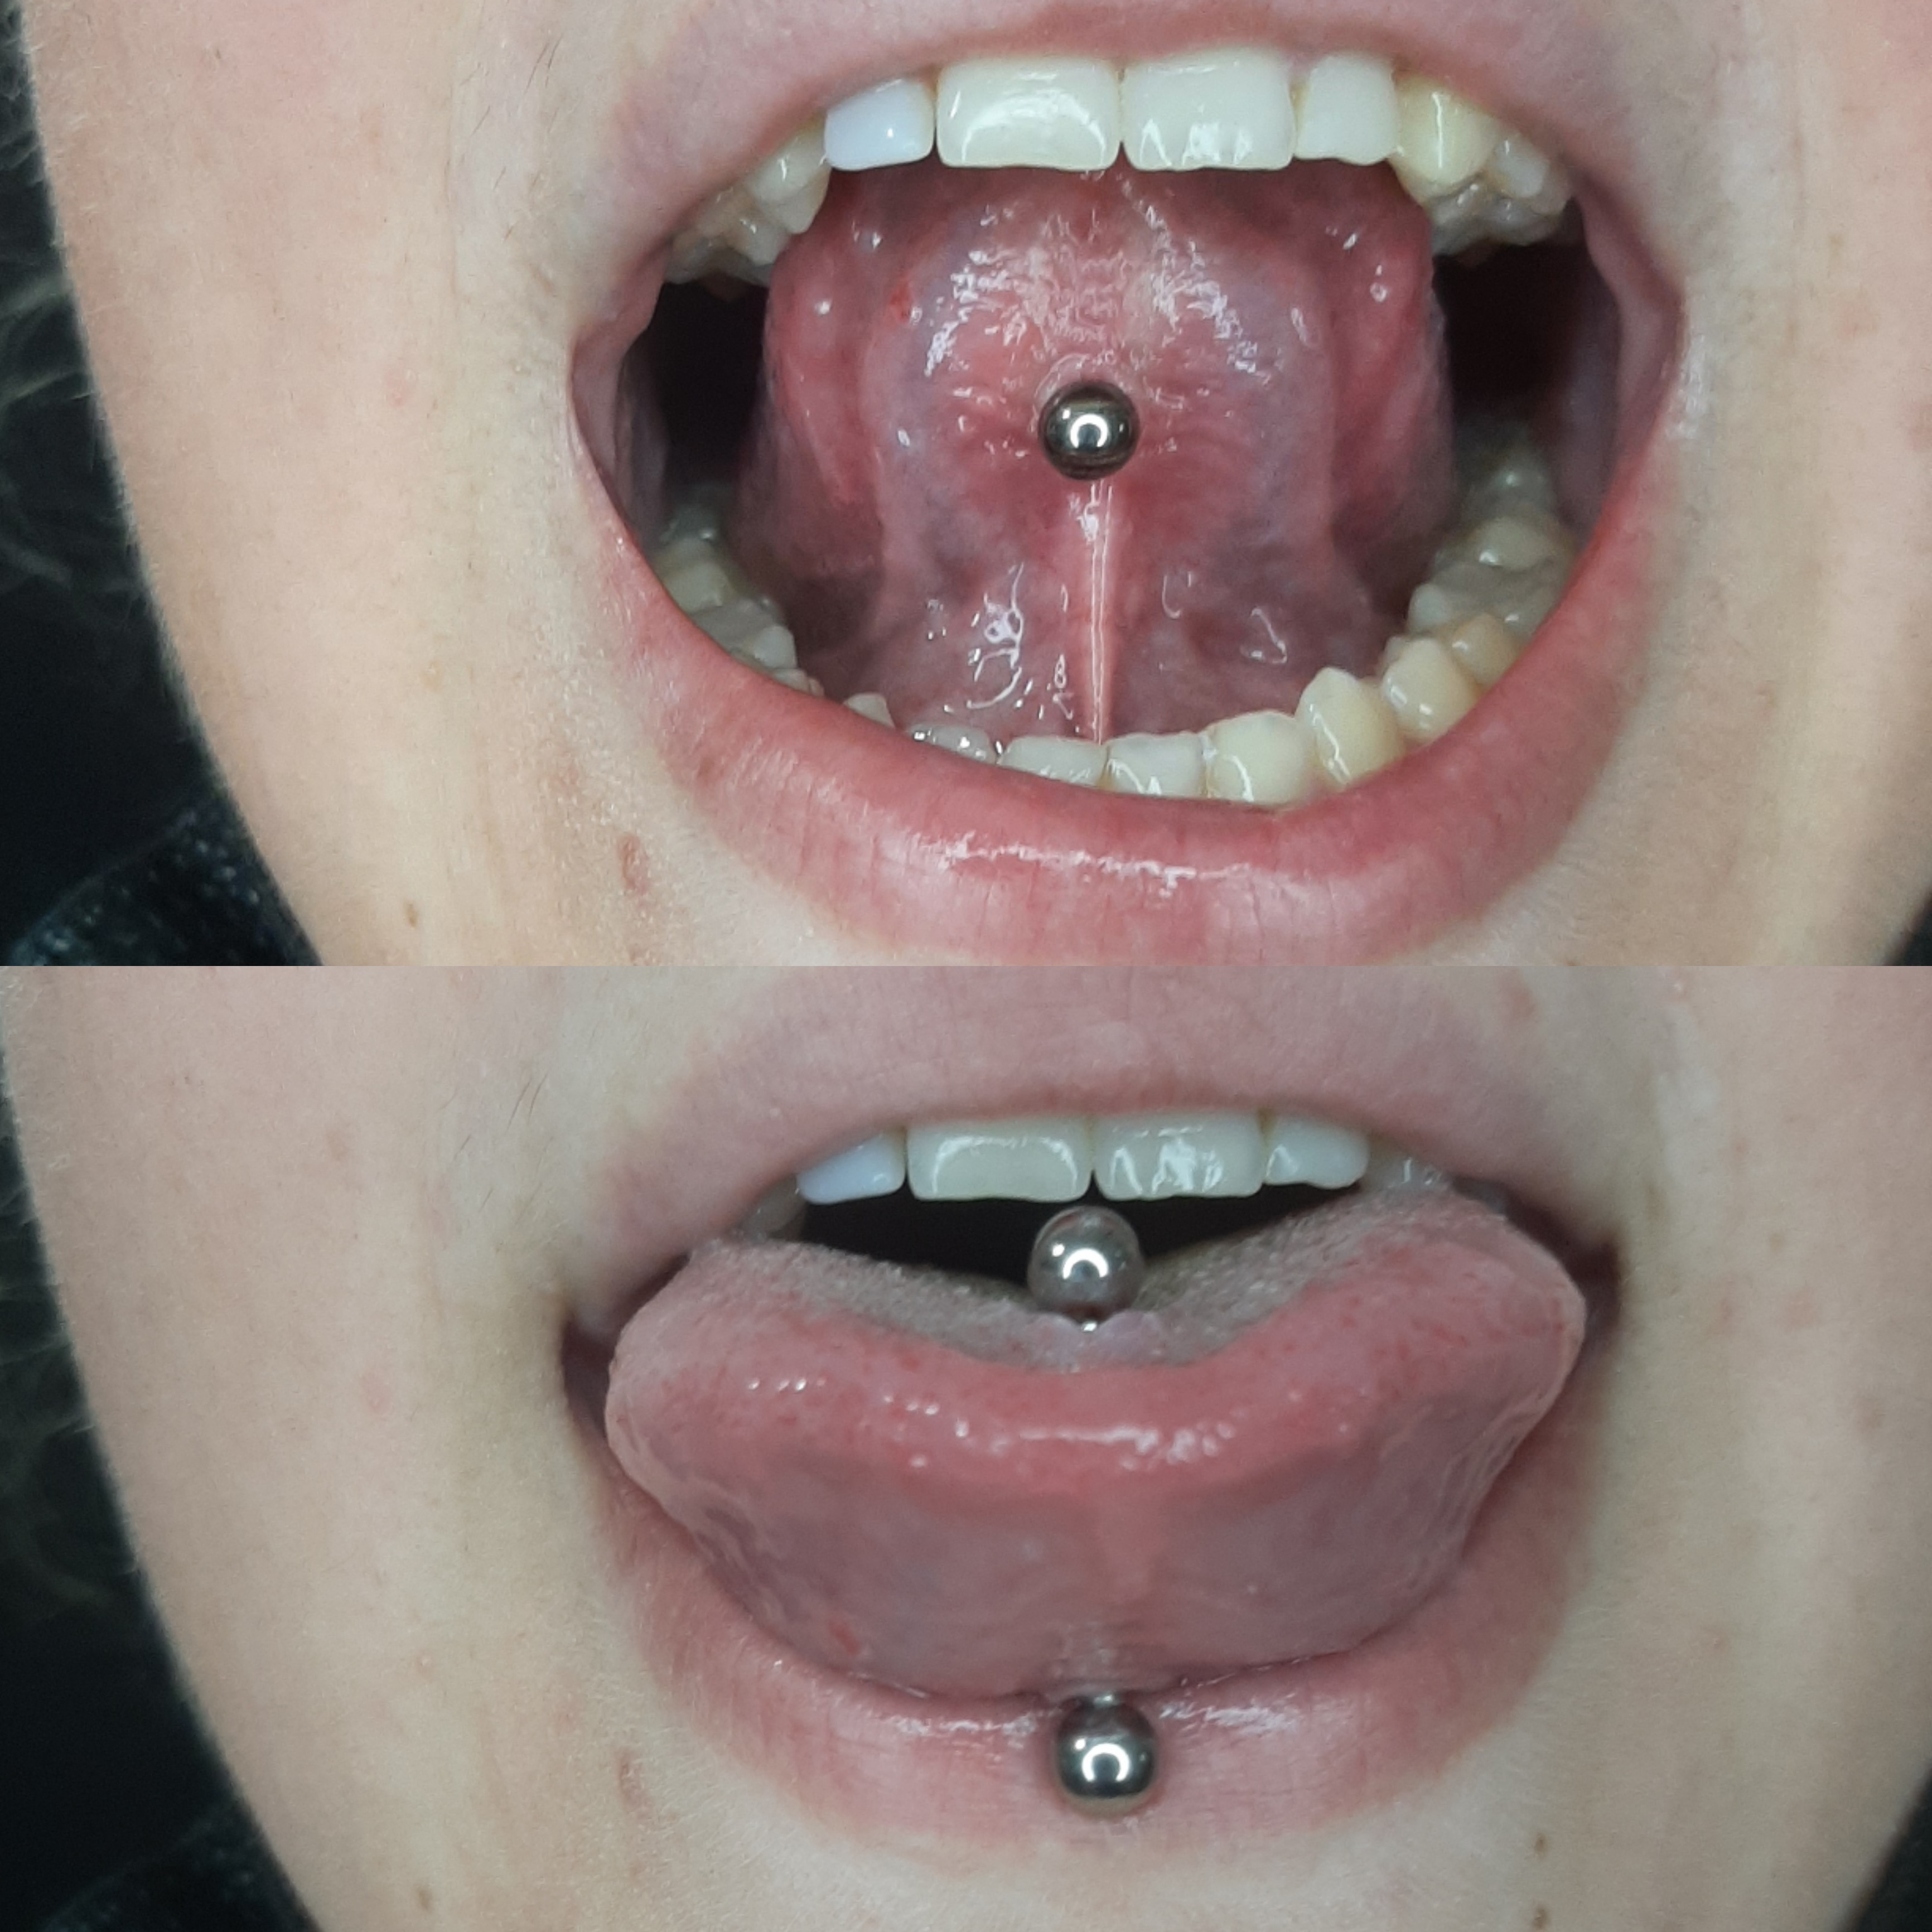 Downsize tongue